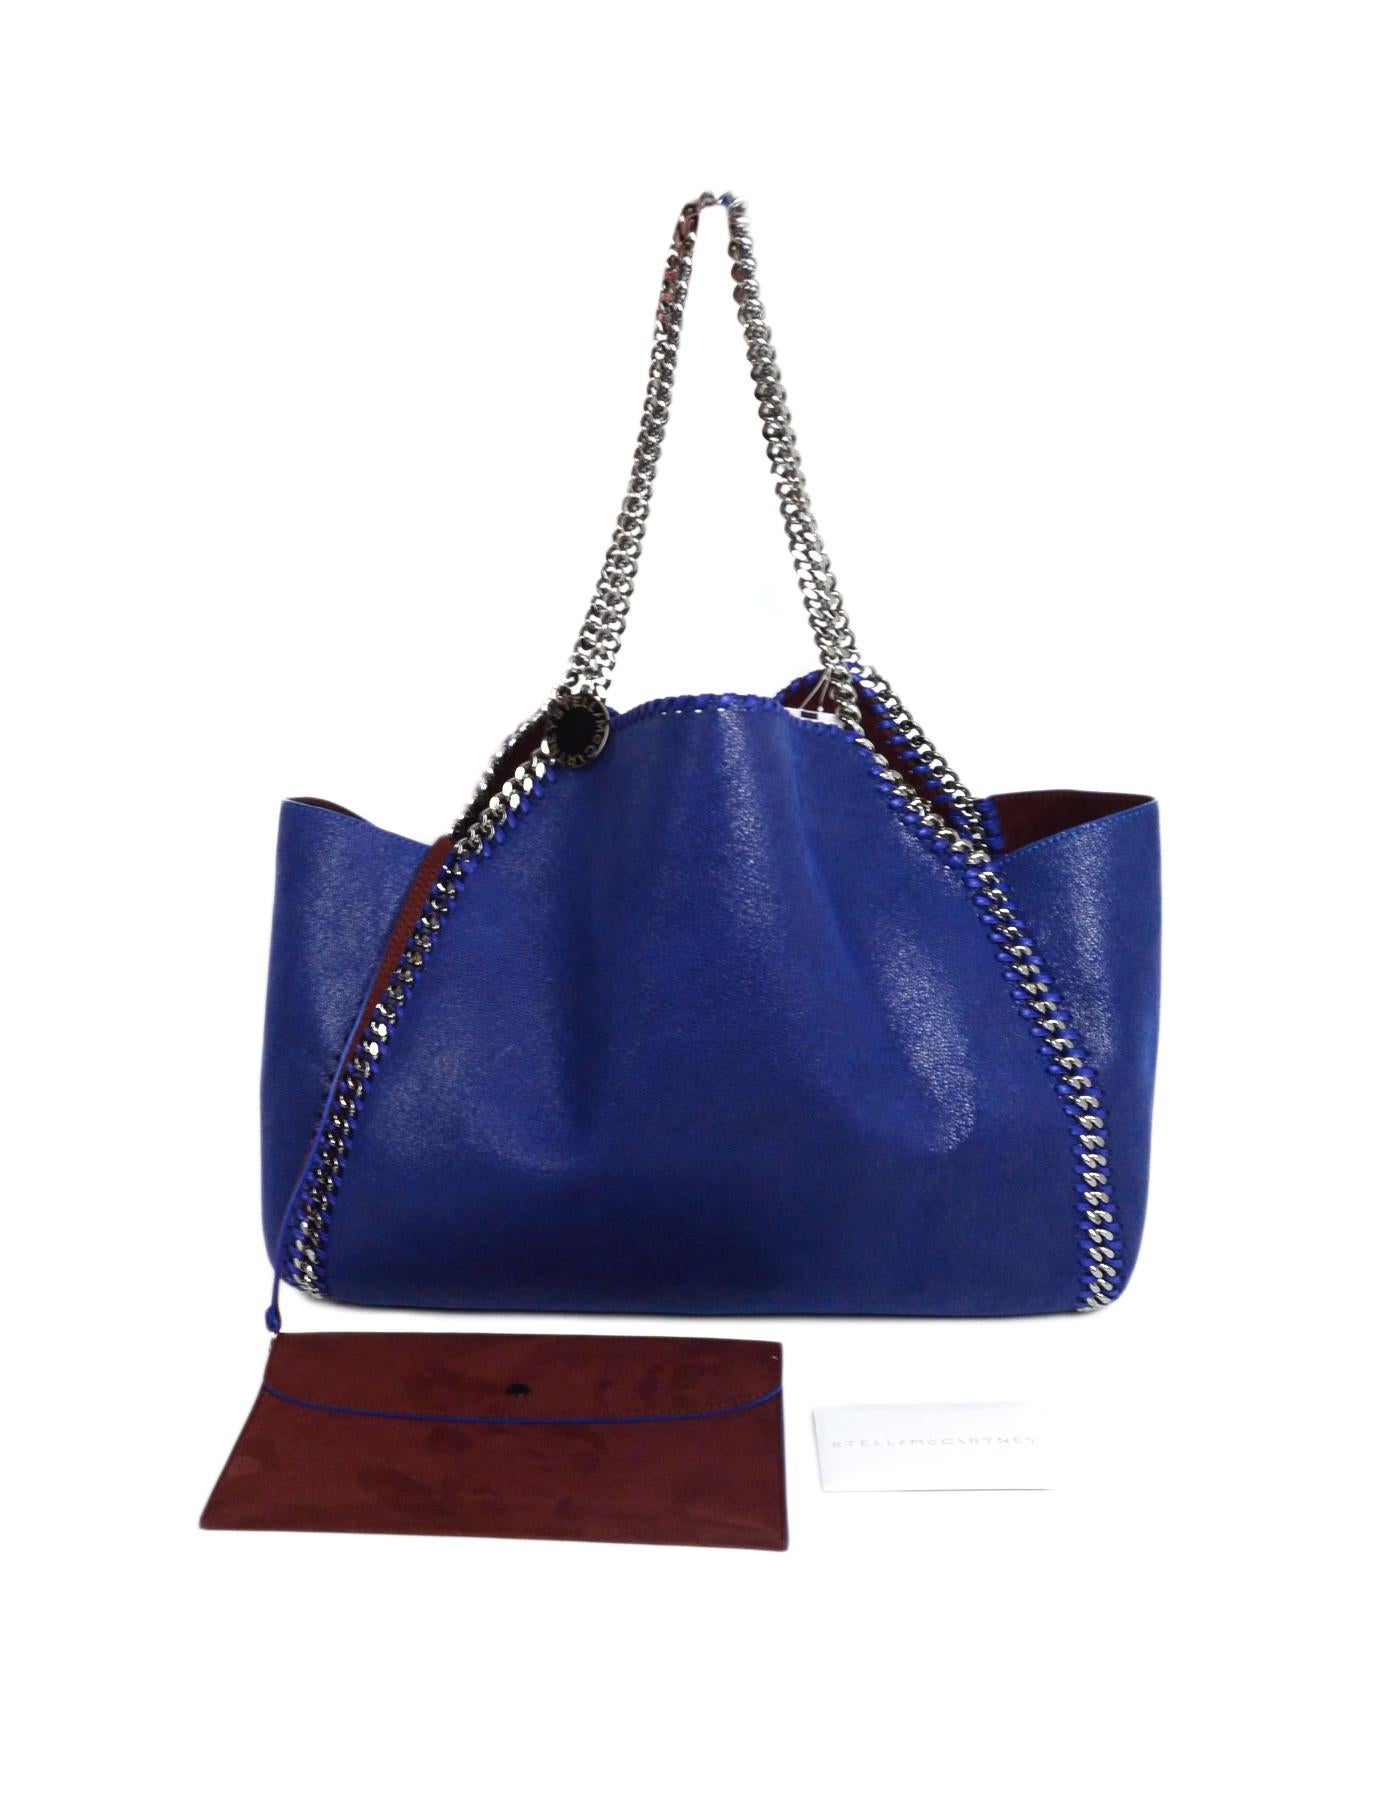 Stella McCartney '18 Blue/Burgundy Vegan Leather Reversible Falabella Tote Bag 4